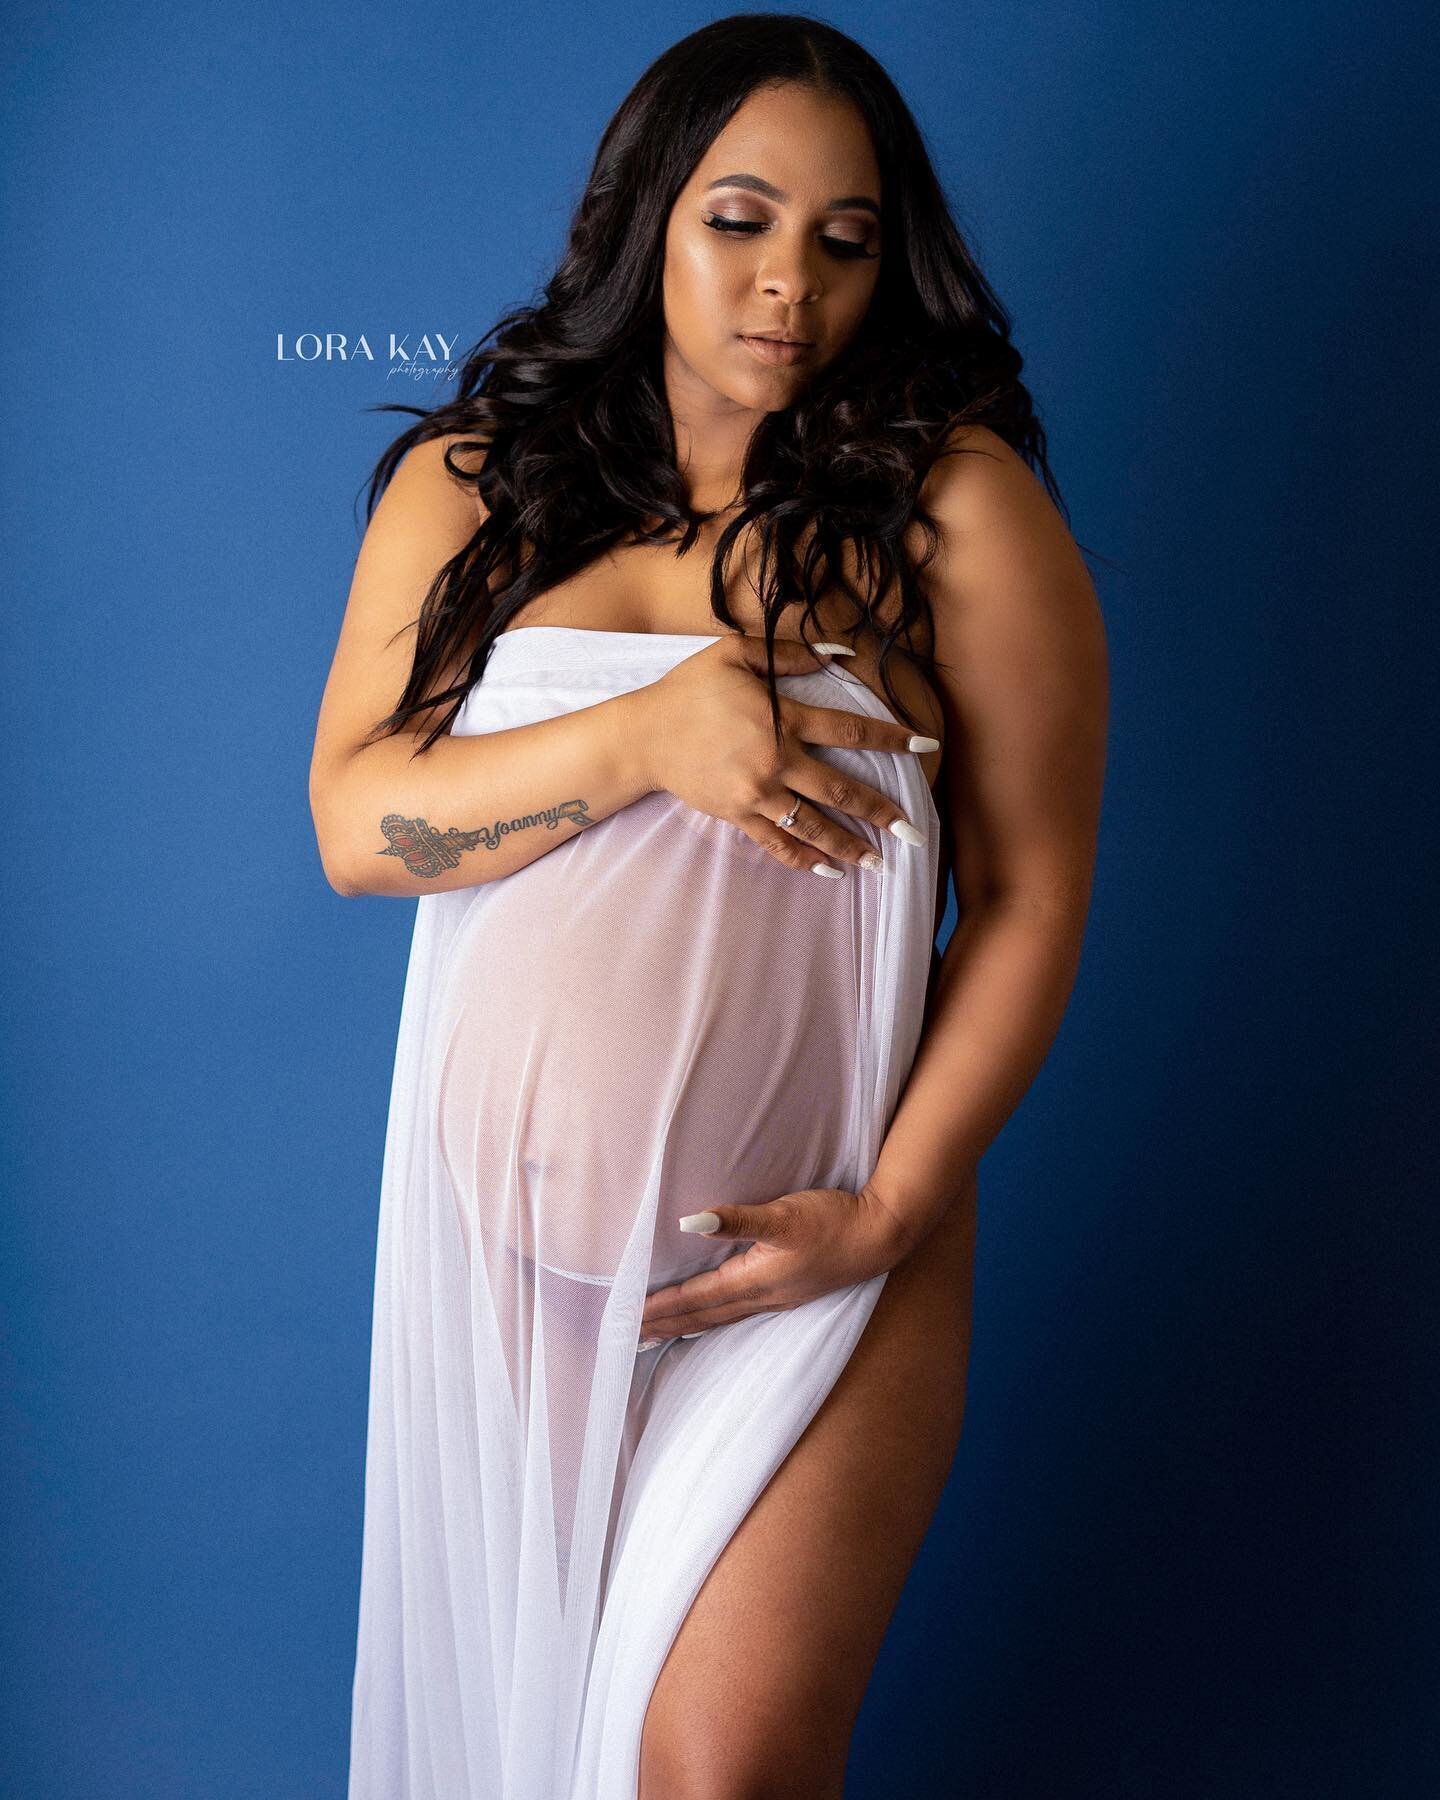 Baby boy on the way 💙

#maternityphotography #maternityphotographer #lorakayphotography #lorakayphotos #fineartphotography #vogue #explorepage #explore #pregnantandperfect #maternityshoot #elegance #simplicity #pregnancy #pregnantandperfect #lorakay